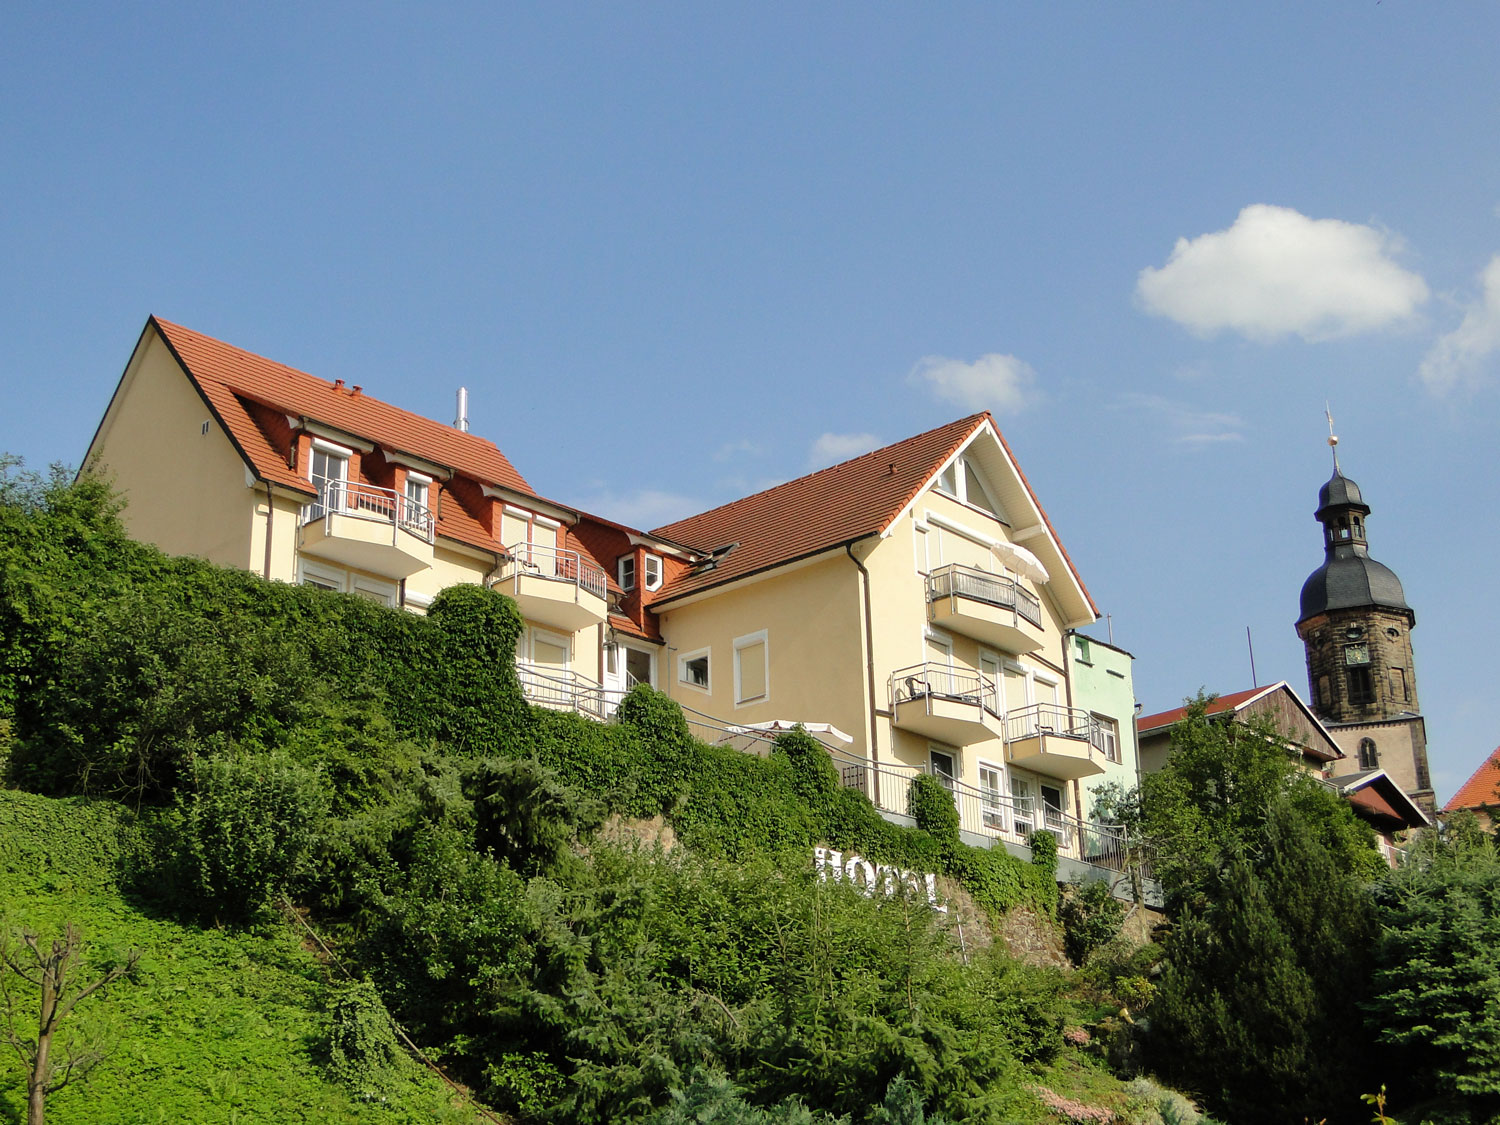 Hotel Am Schloss in Dippoldiswalde bei Burkersdorfer Weg 0 09623 Frauenstein